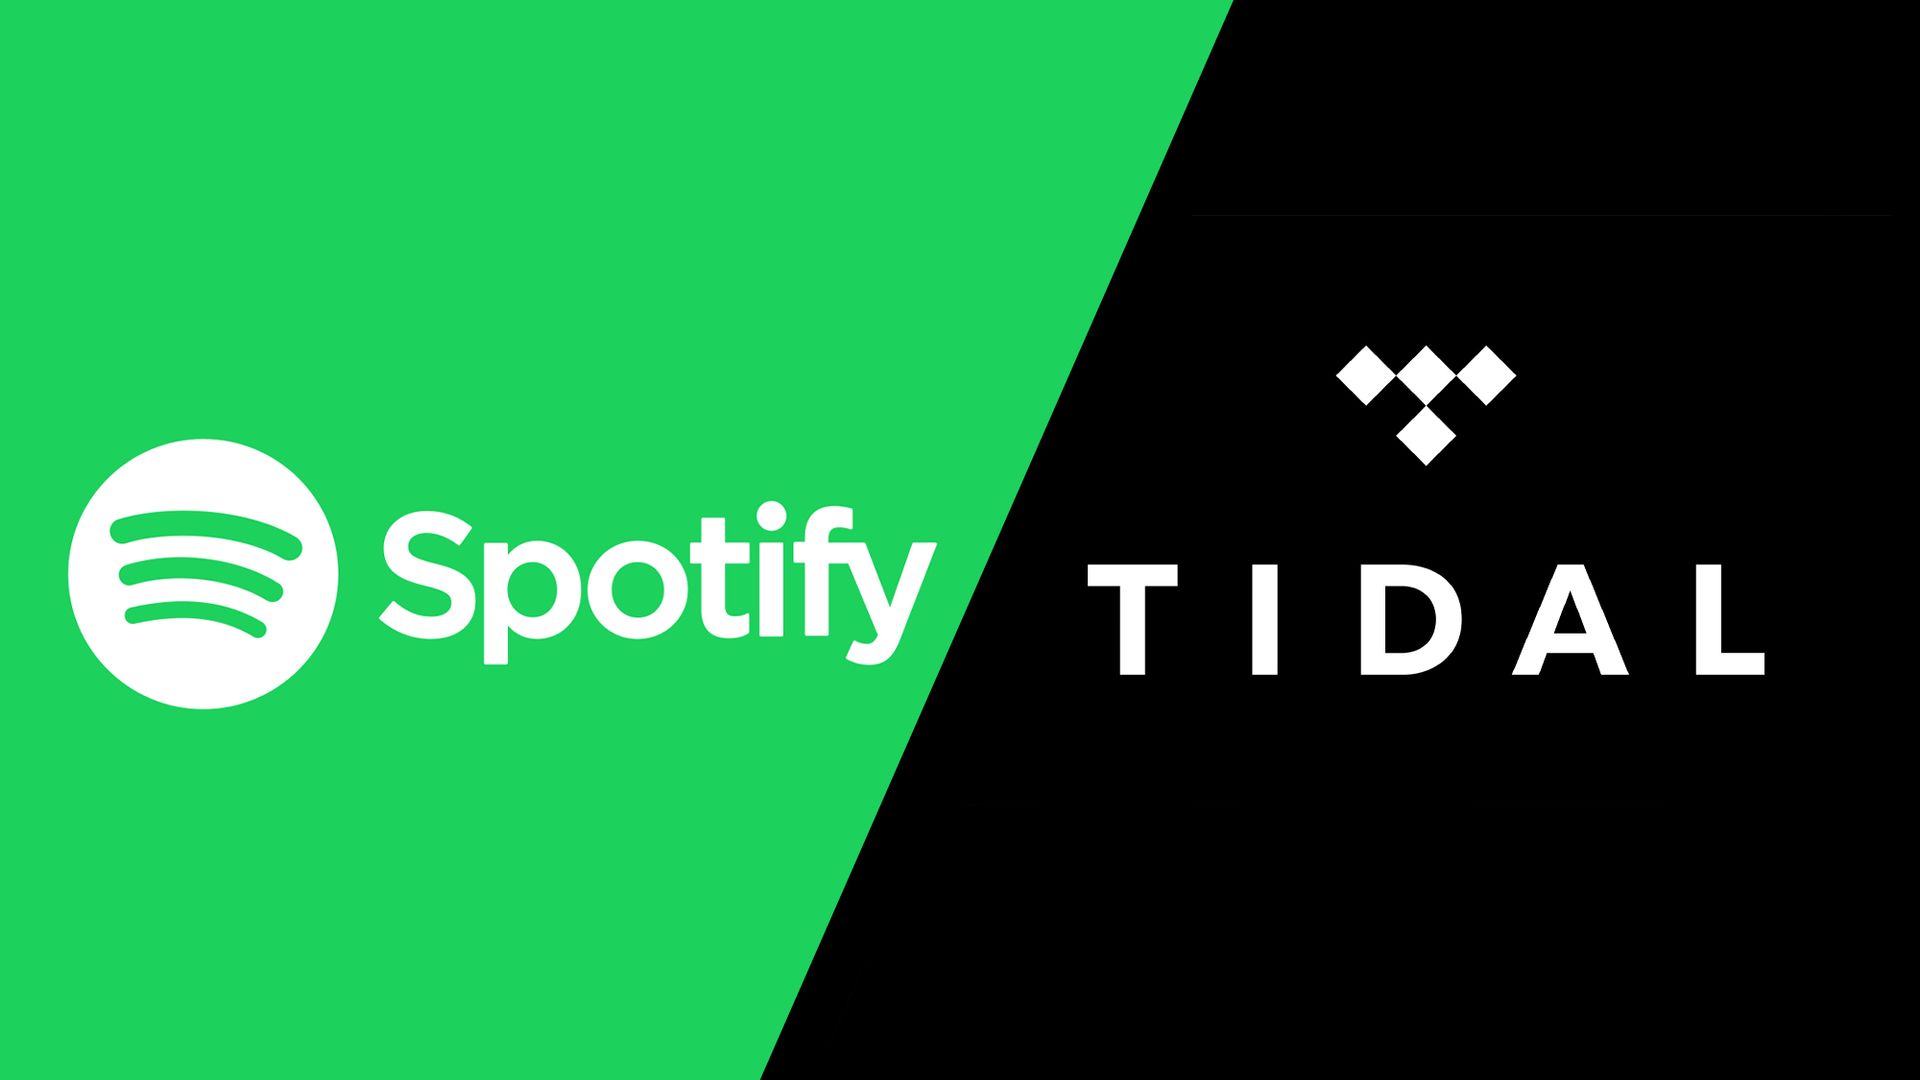 tidal vs spotify more songs